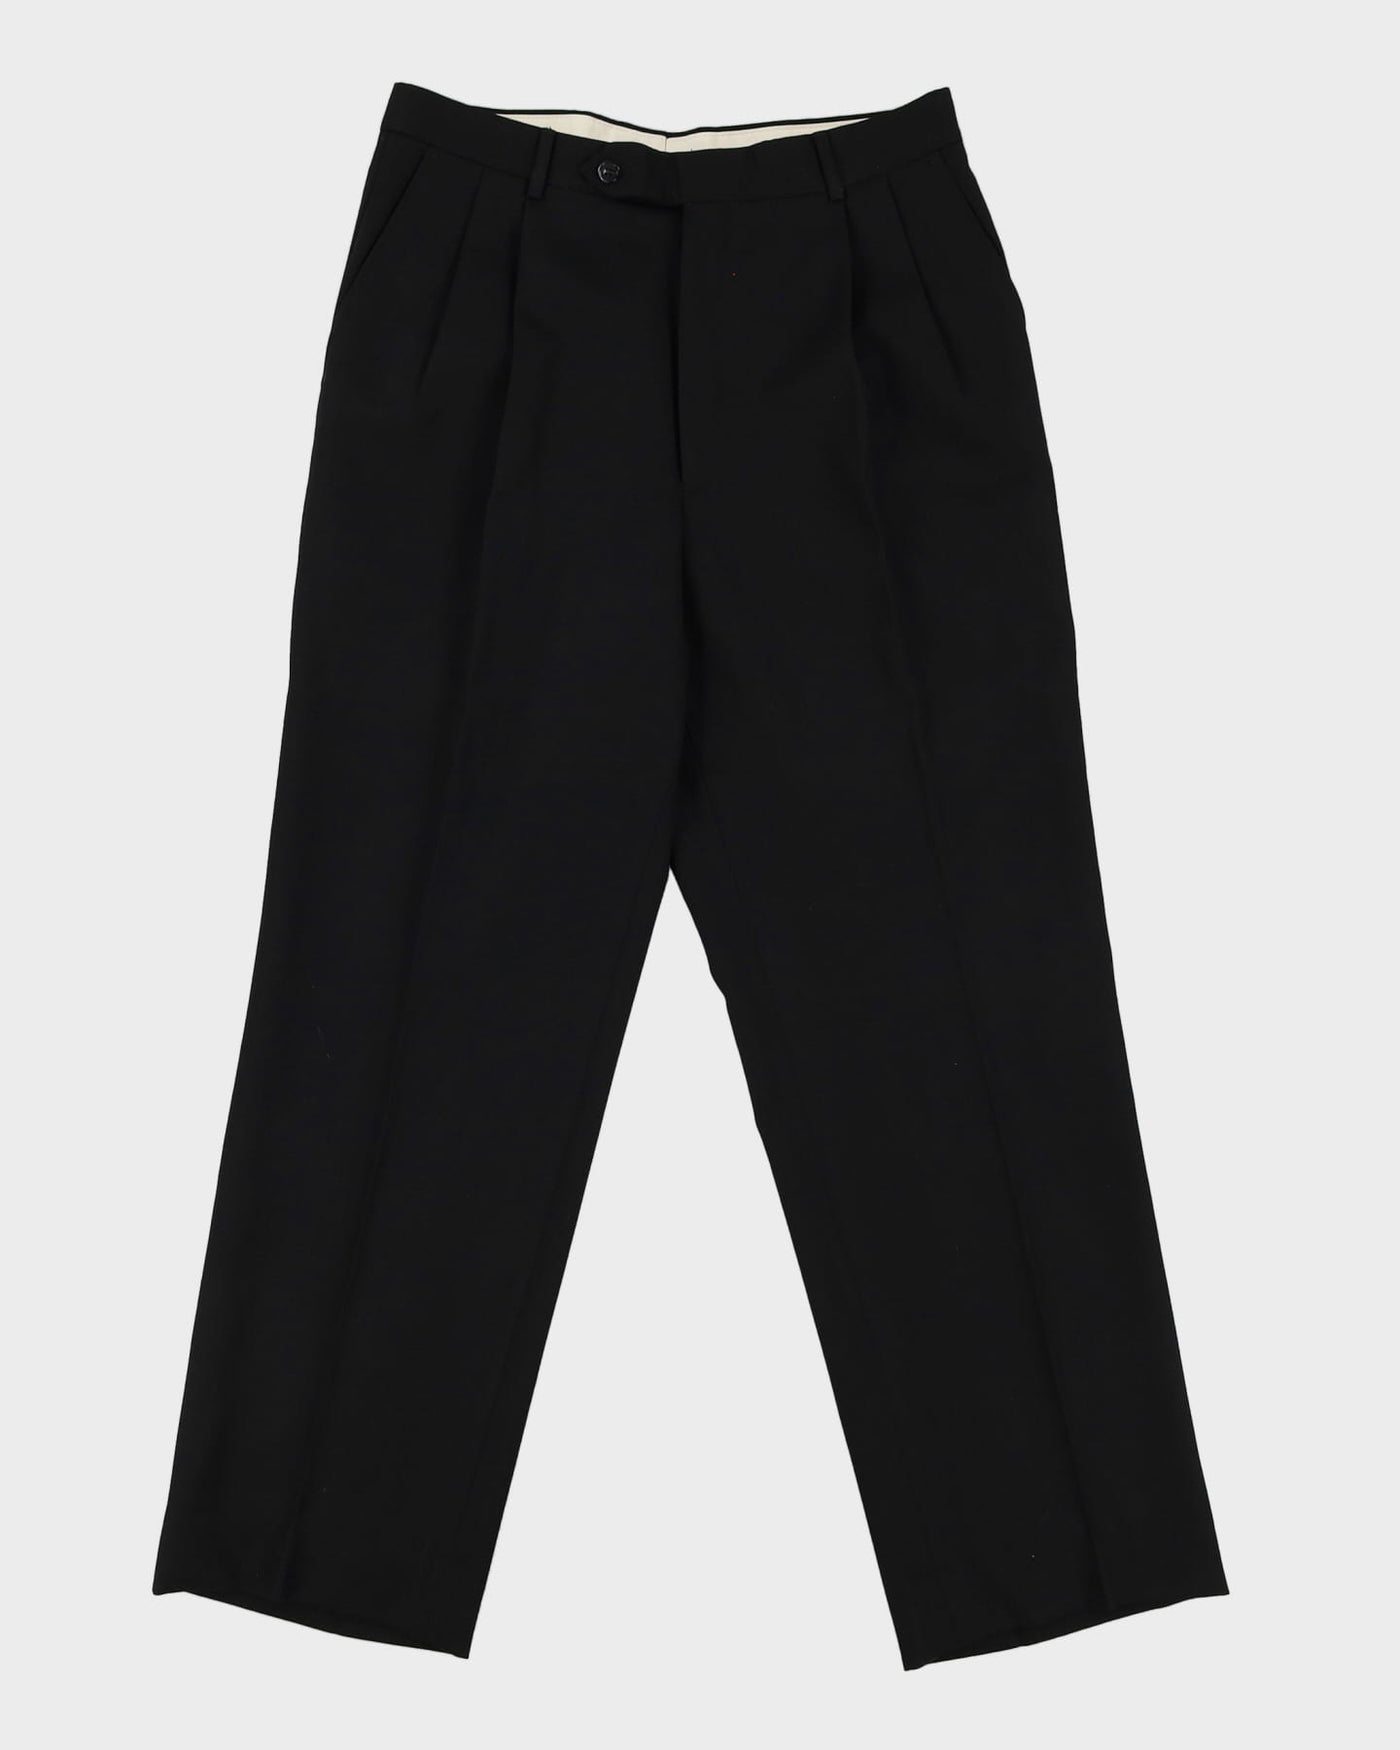 Oscar De La Renta Black 2 Piece Suit - CH42 W32